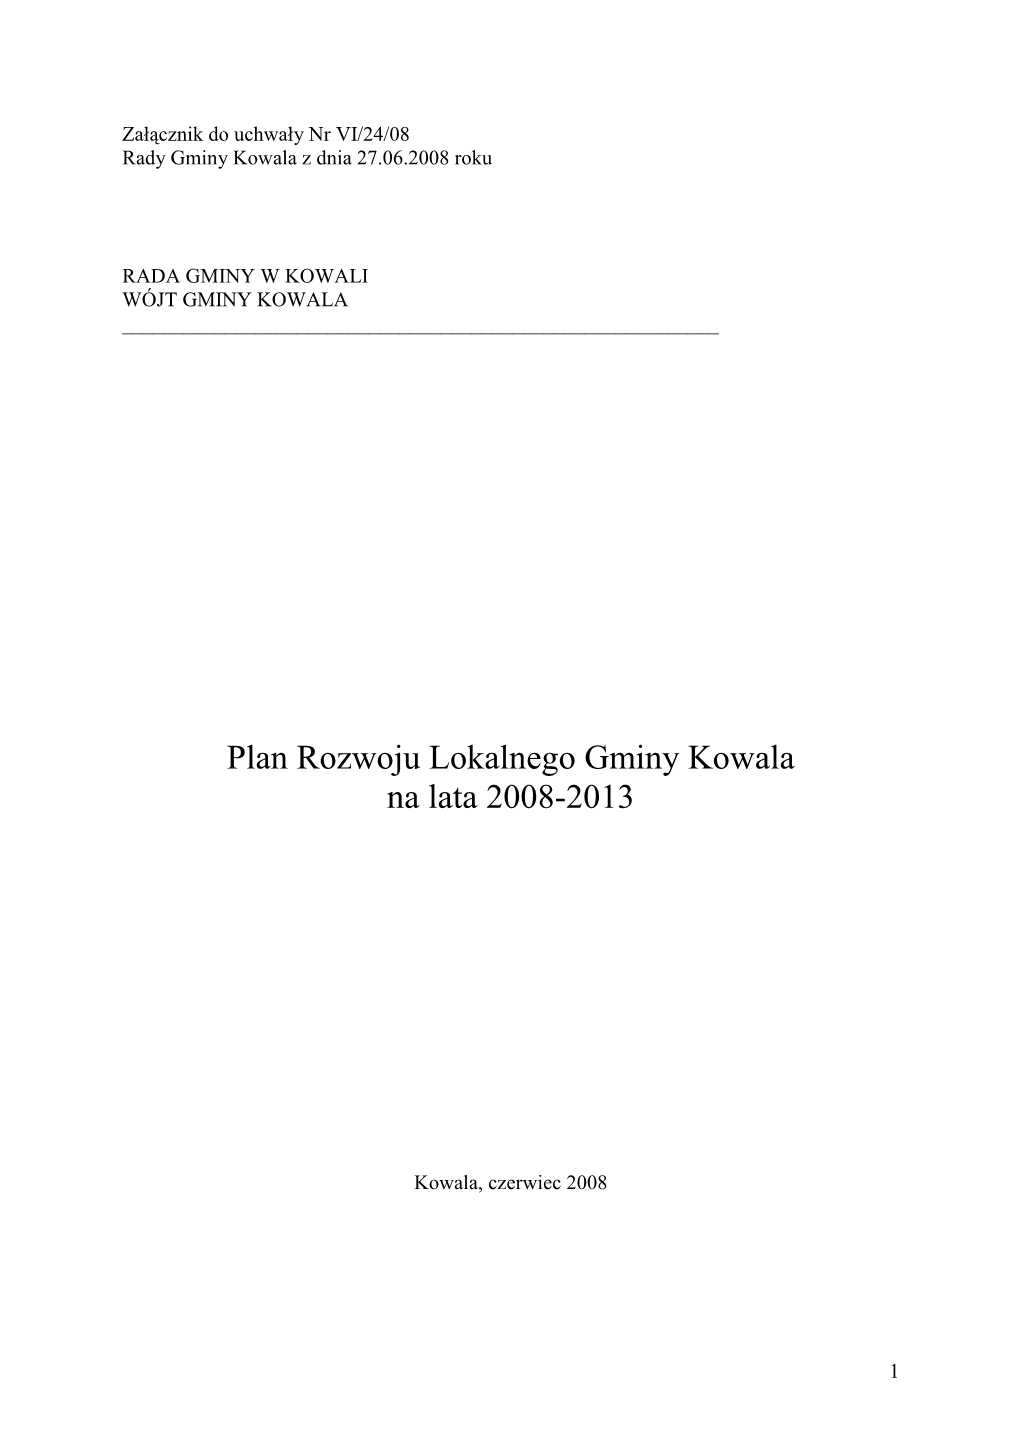 Plan Rozwoju Lokalnego Gminy Kowala Na Lata 2008-2013